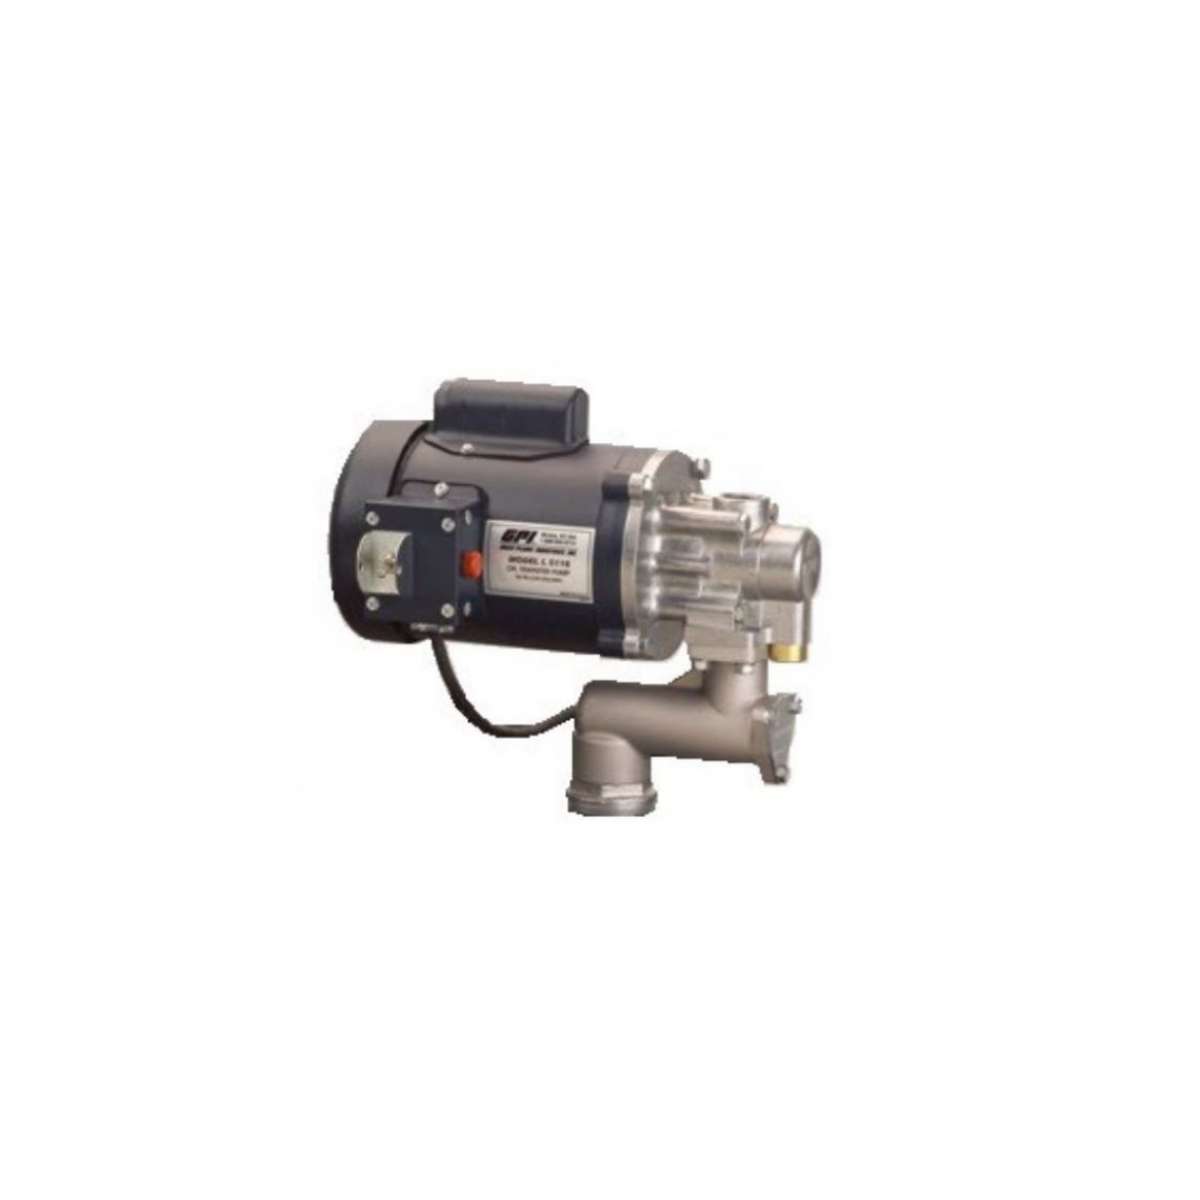 120 Volt Oil Transfer Pump with Digital Display Dispensing Handle